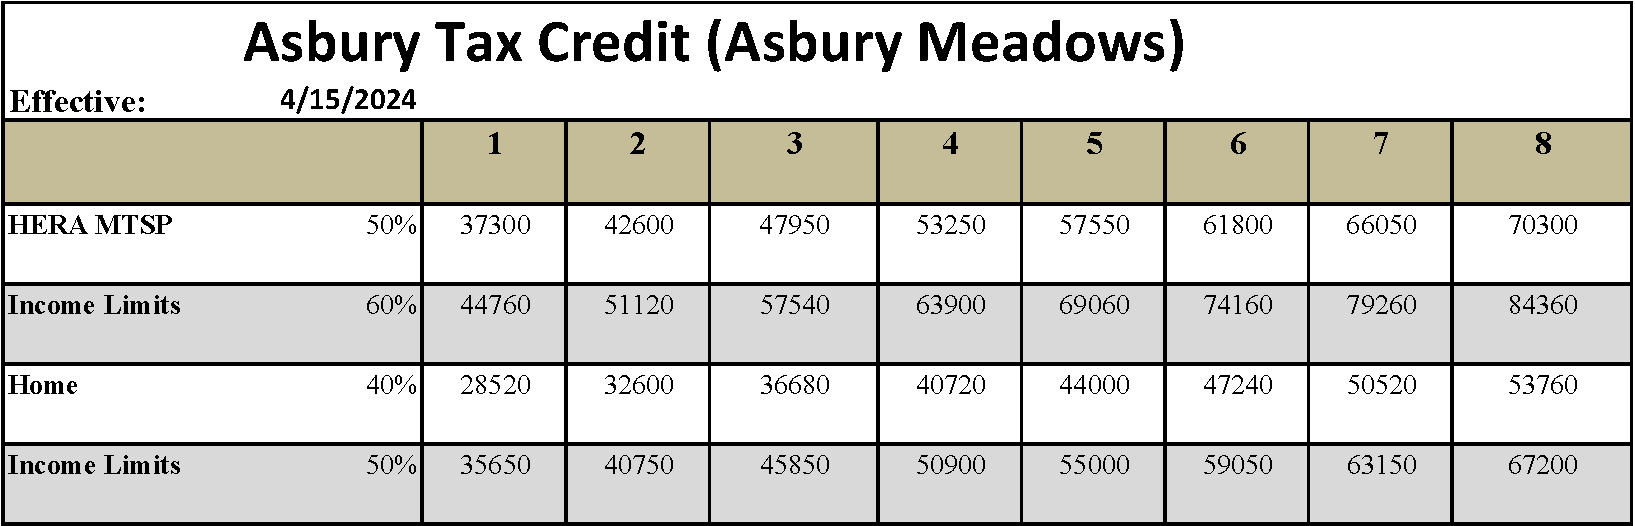 Asbury Income Limits